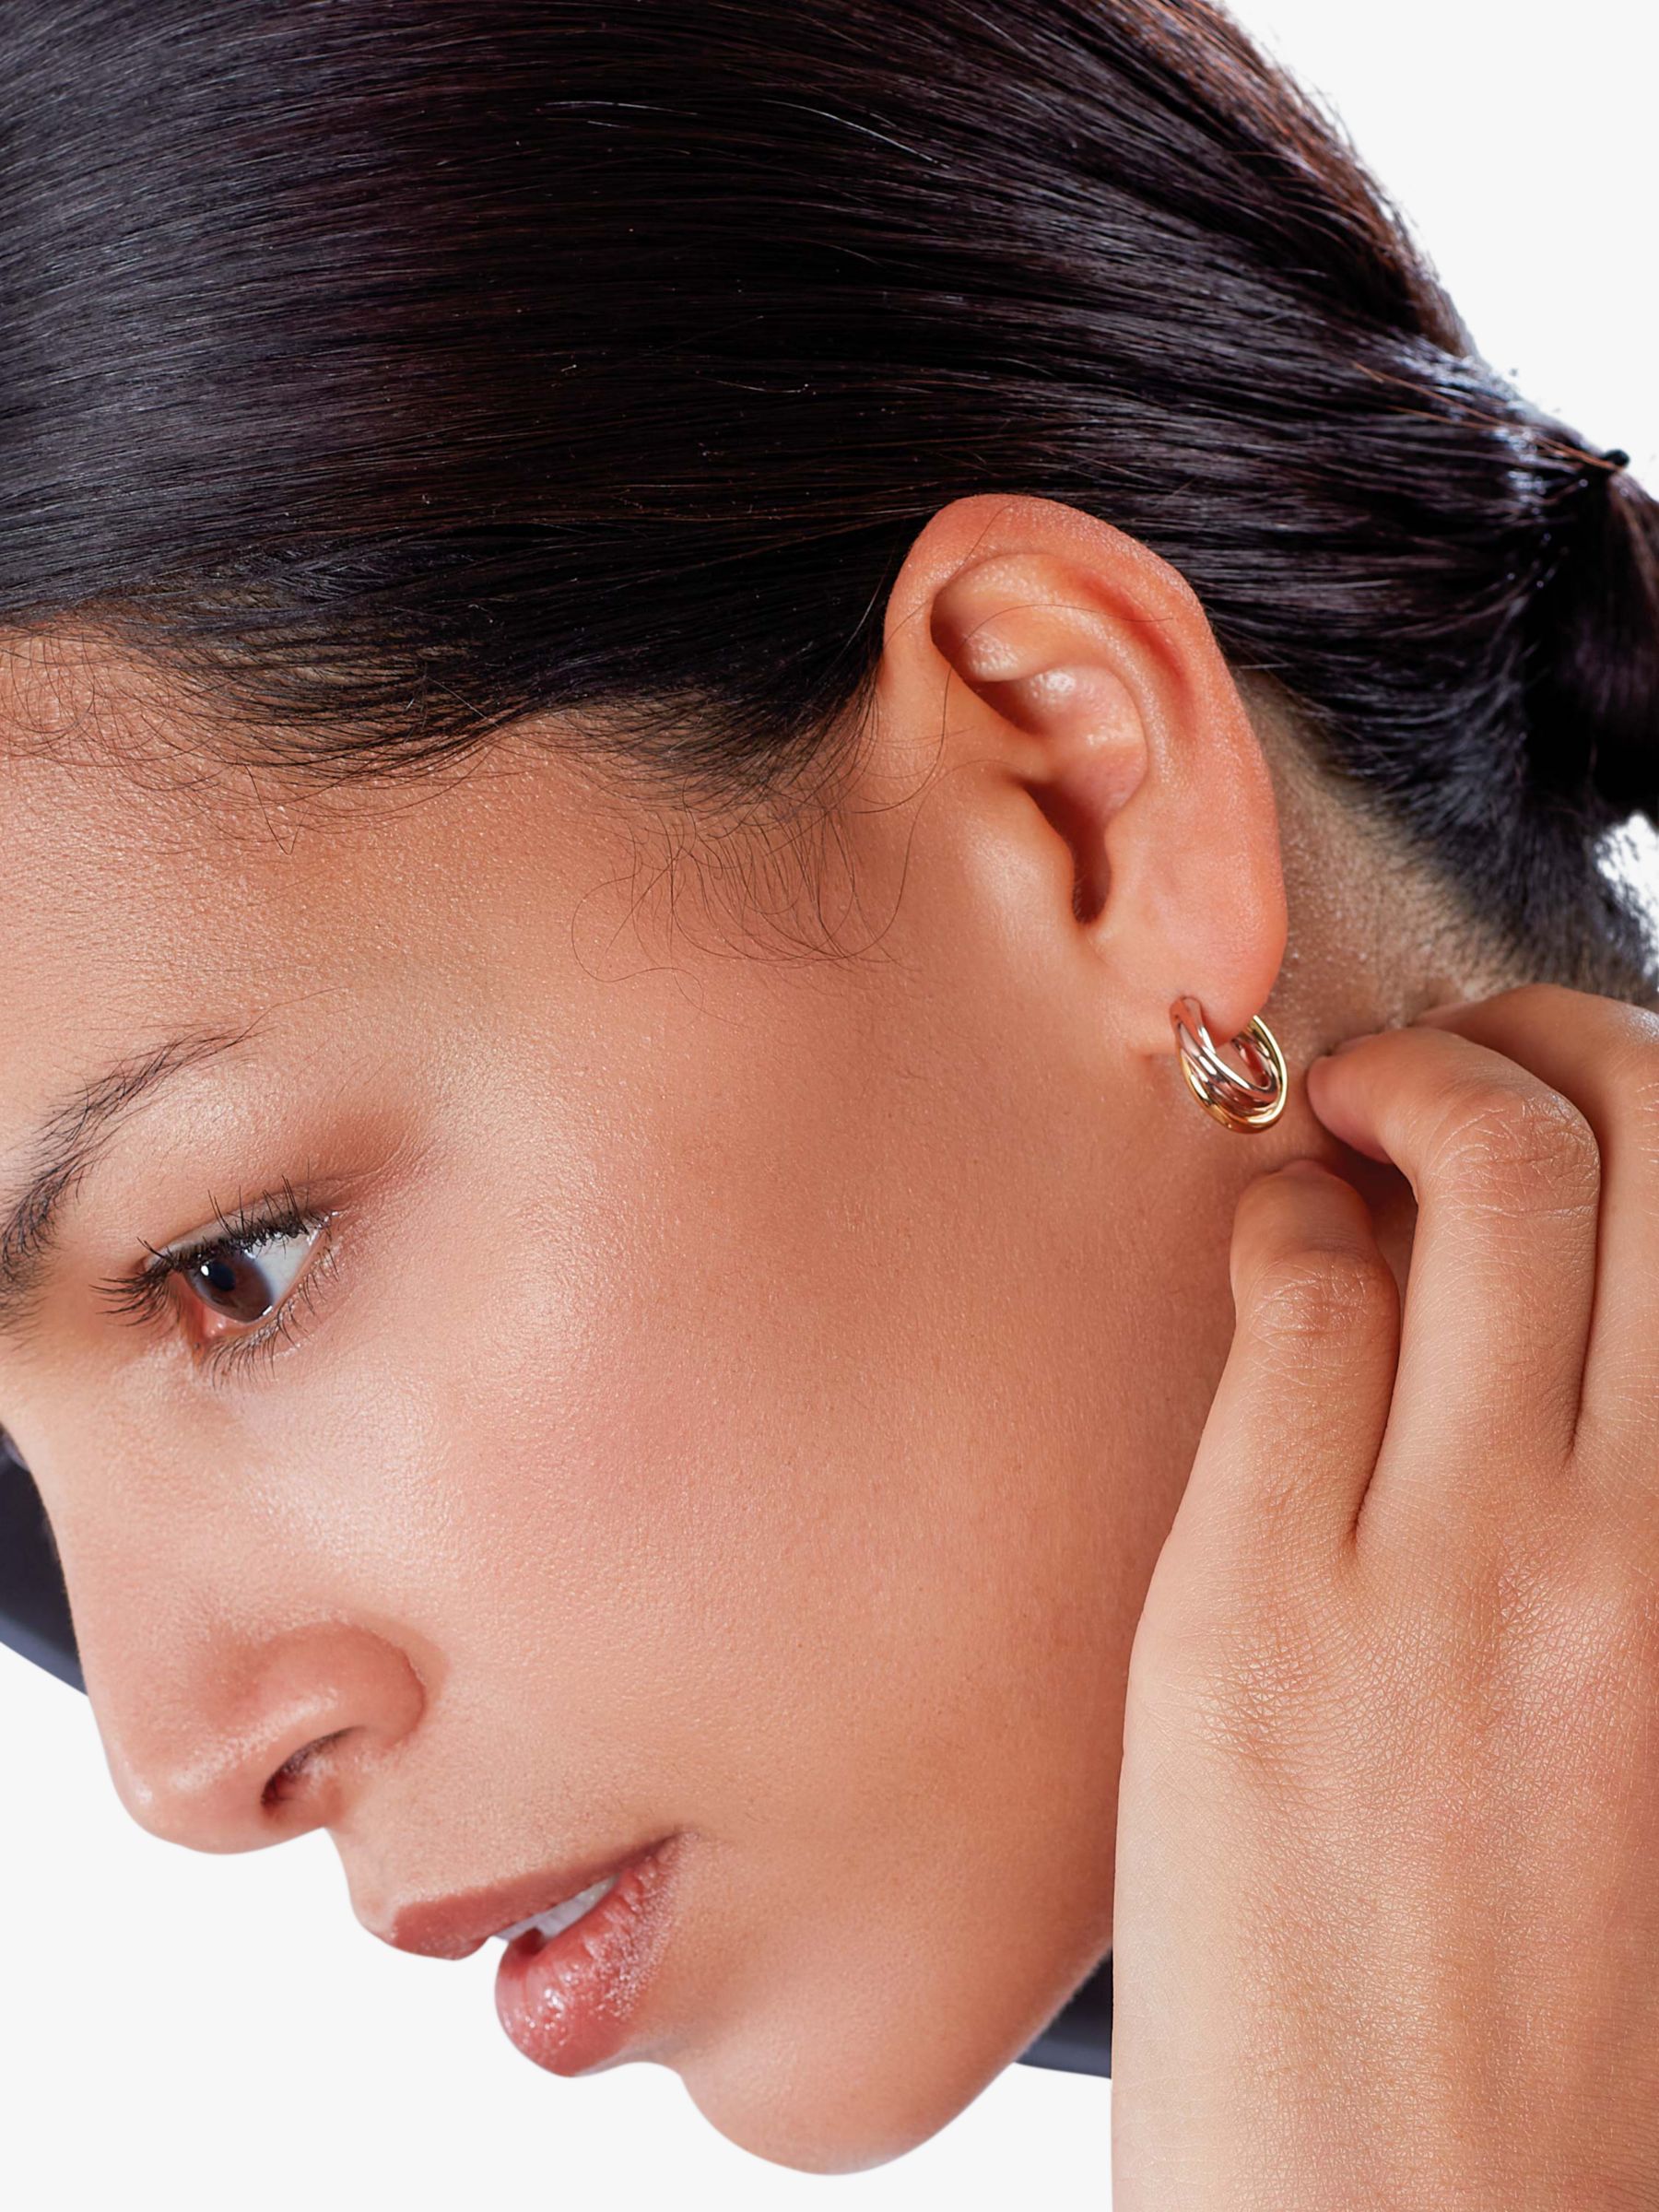 Kit Heath Bevel Trilogy Semi Hoop Stud Earrings, Multi